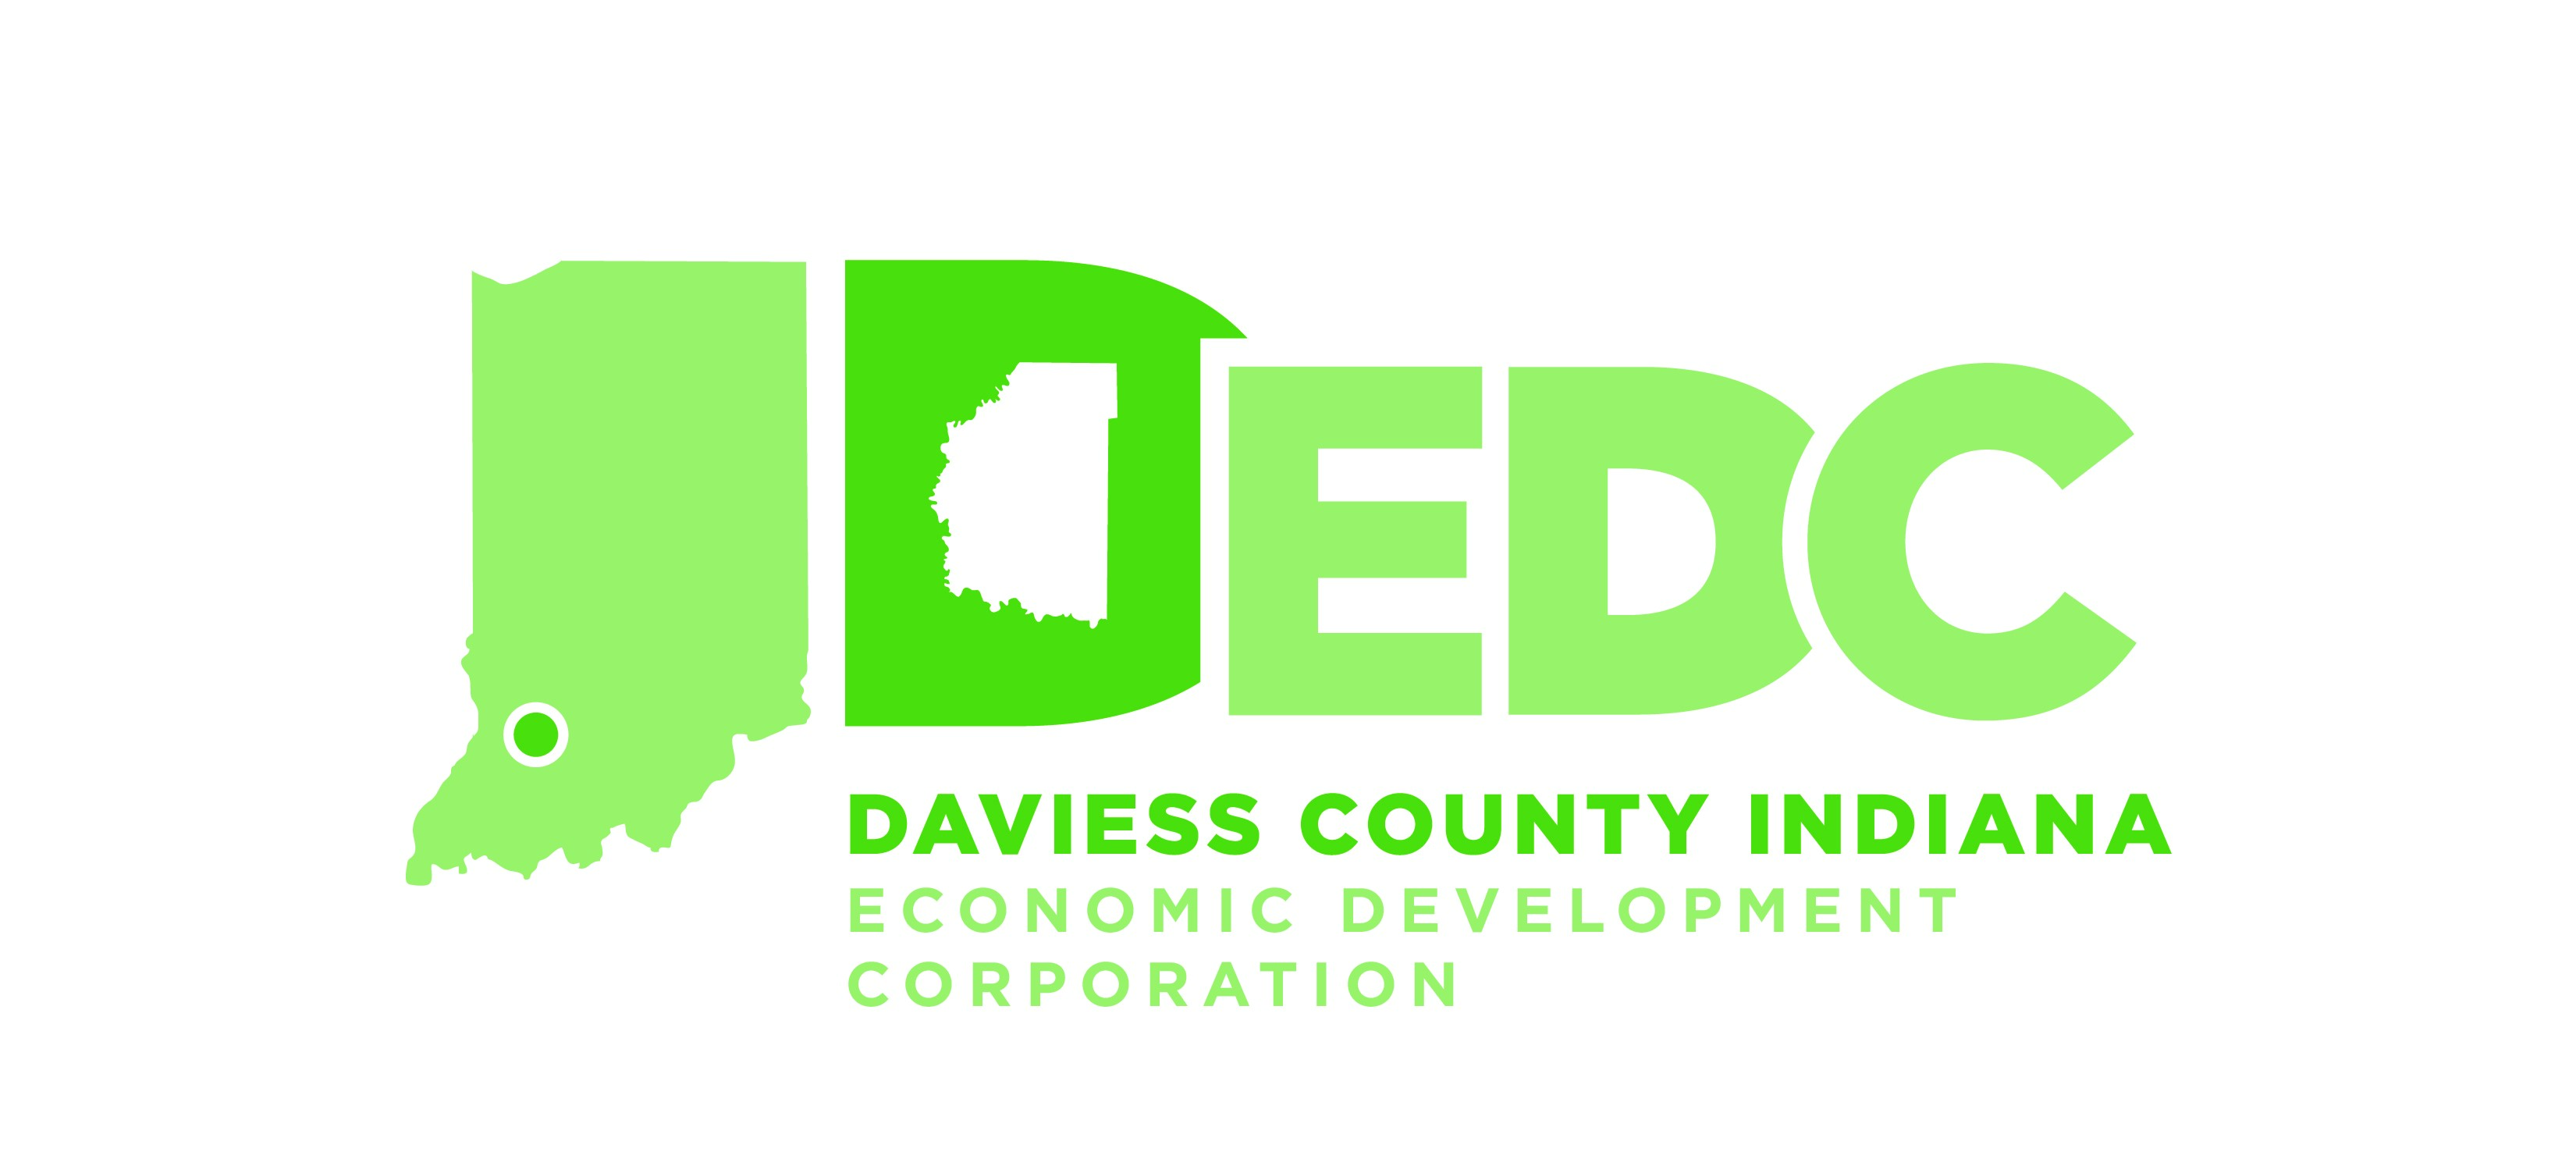 New Develop Daviess economic development logo